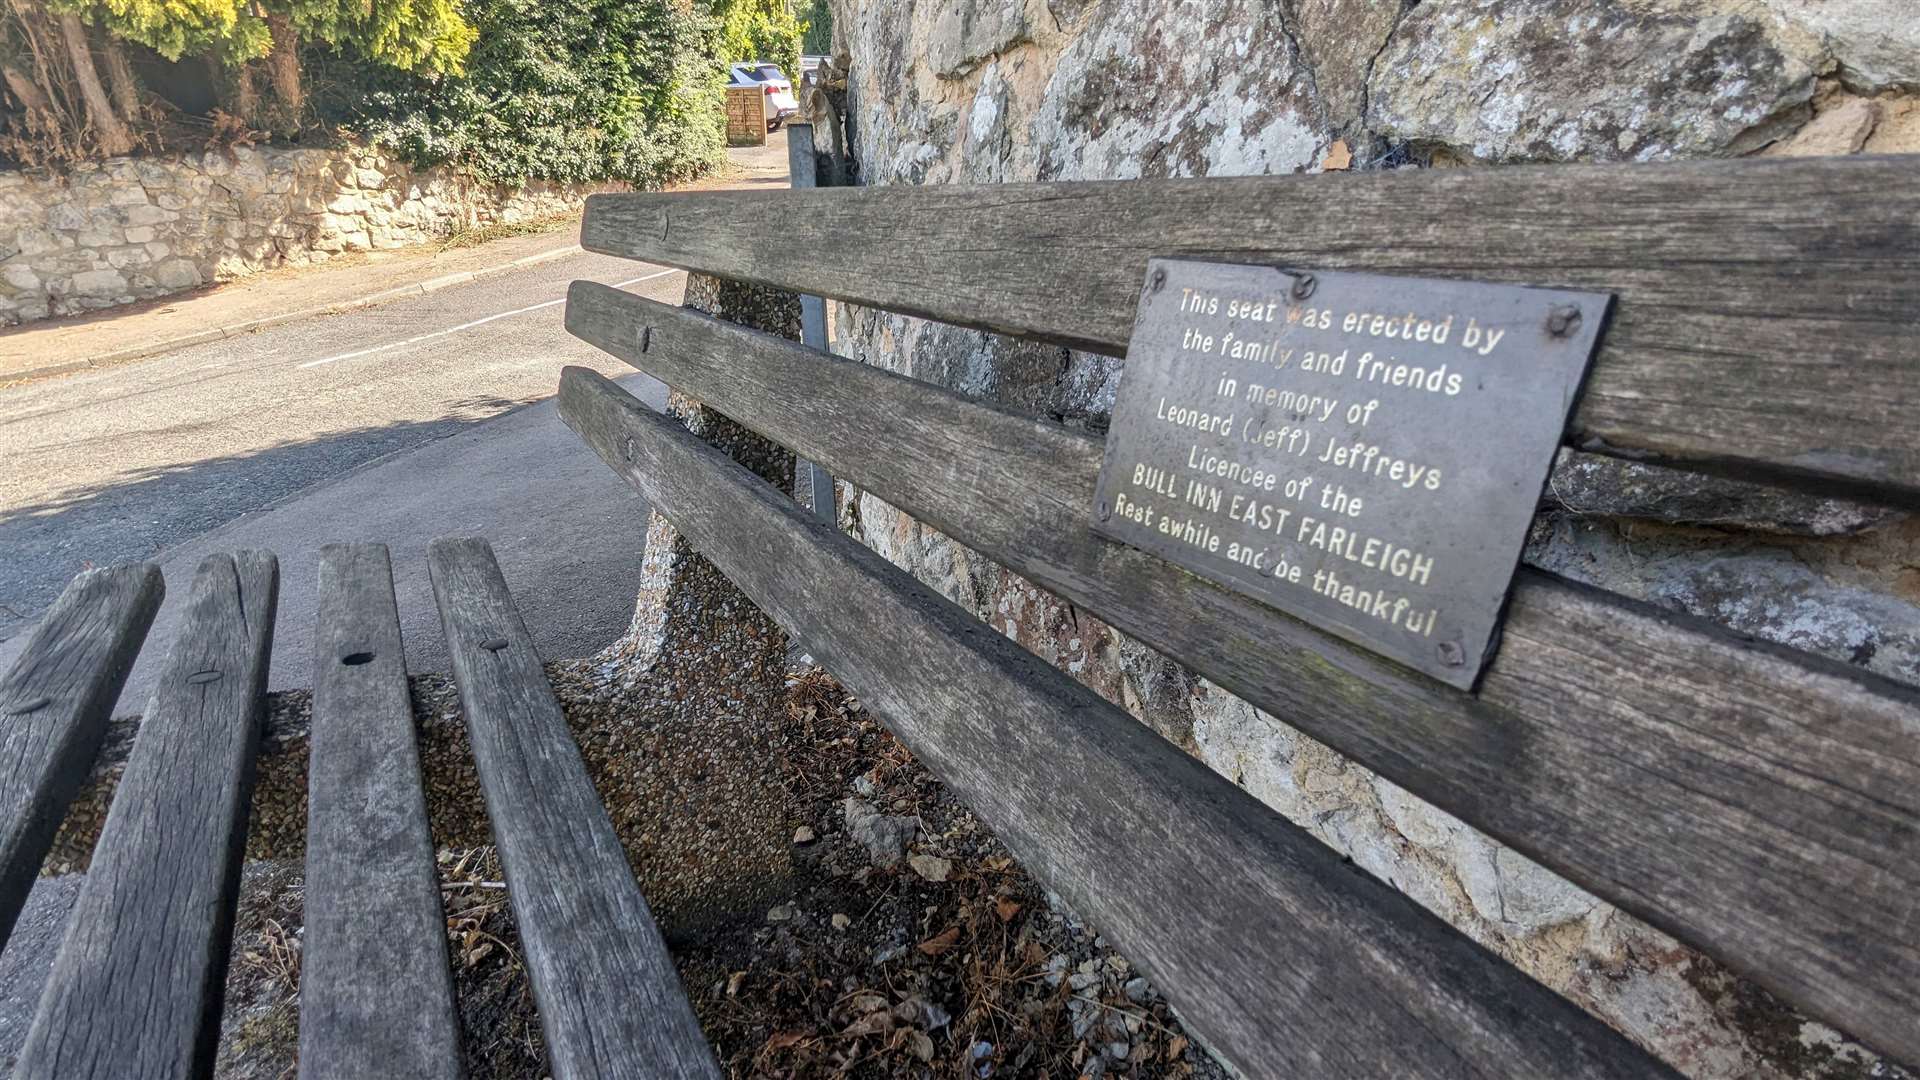 The memorial bench in East Farleigh